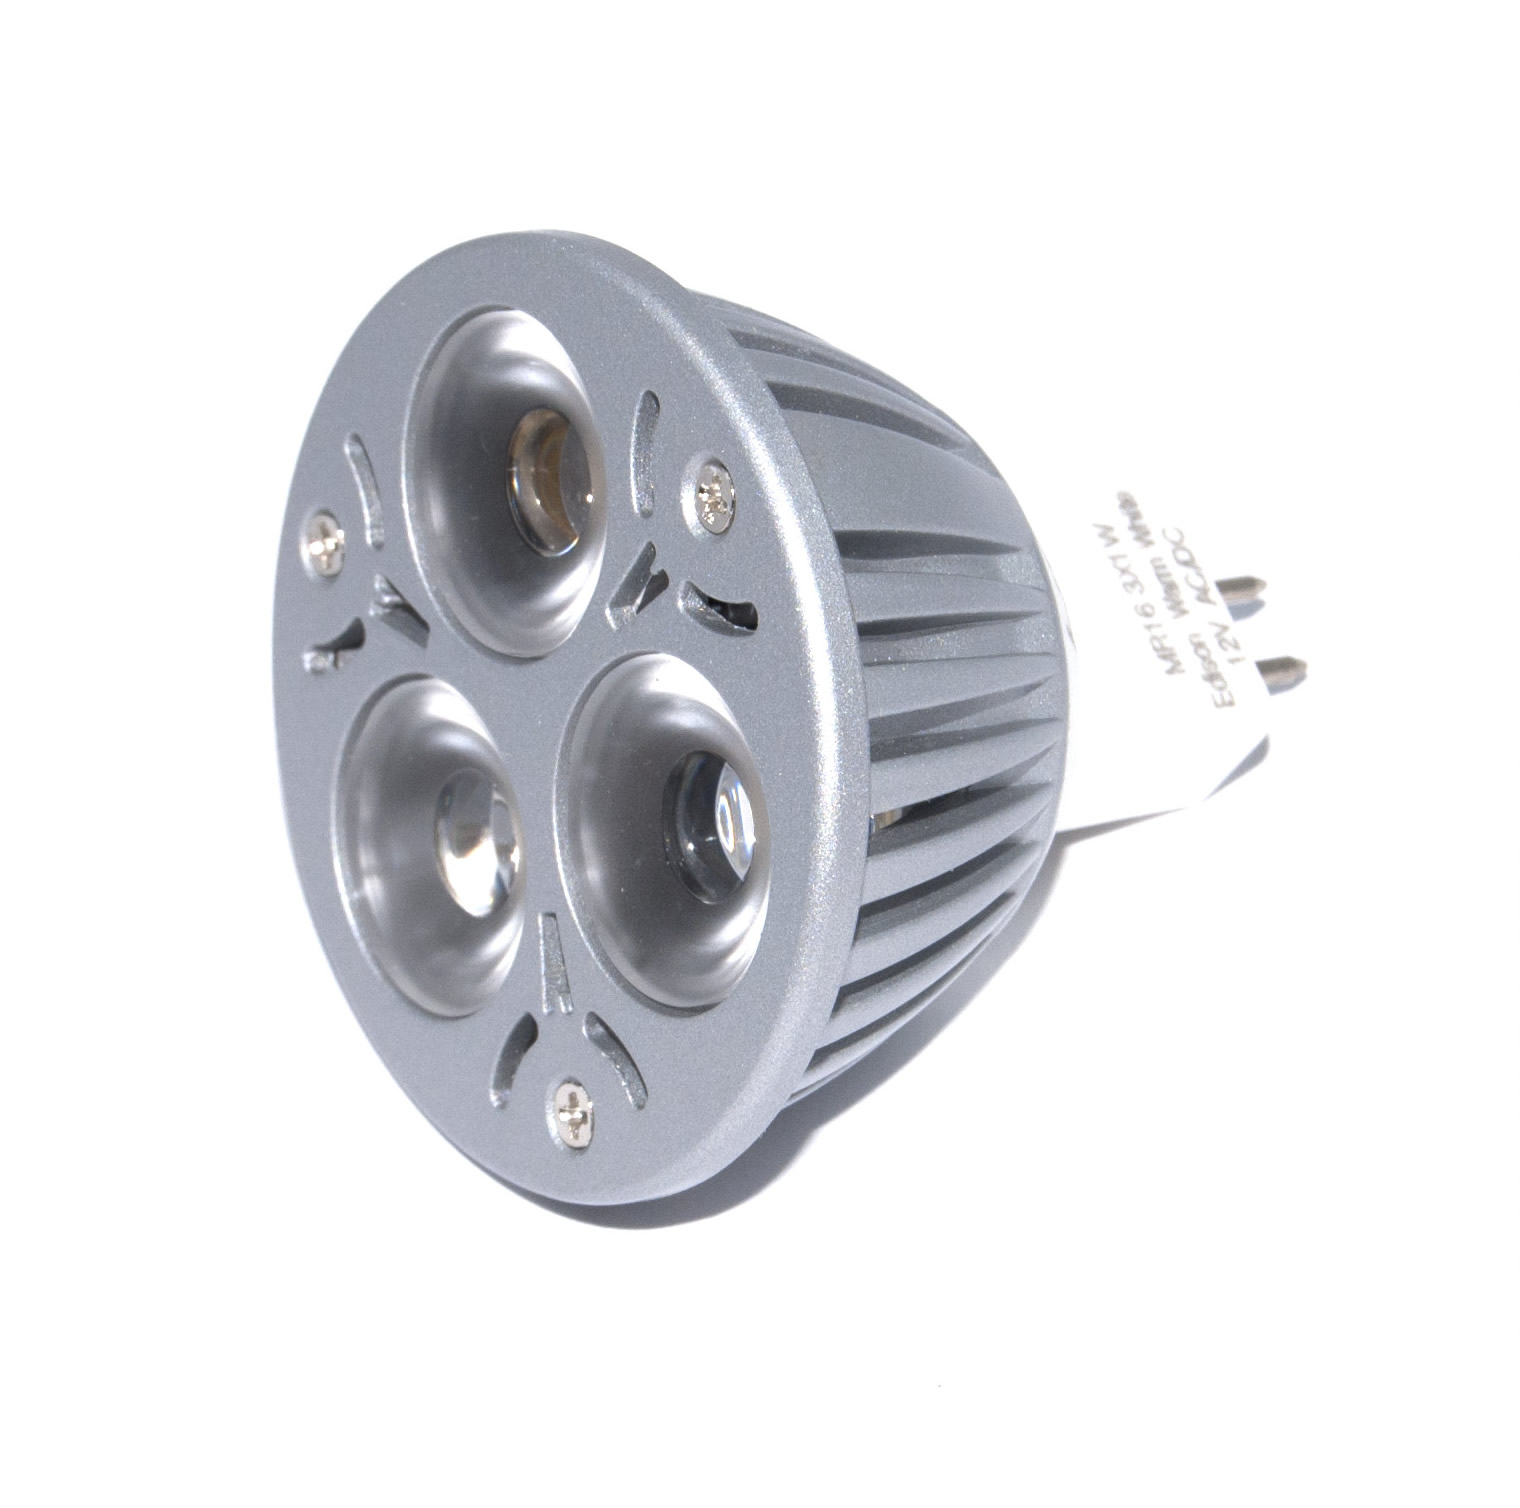 MR16 Powerled 3x1W Power LED 3 watt Warm wit orgineel Edison | Powerled-verlichting